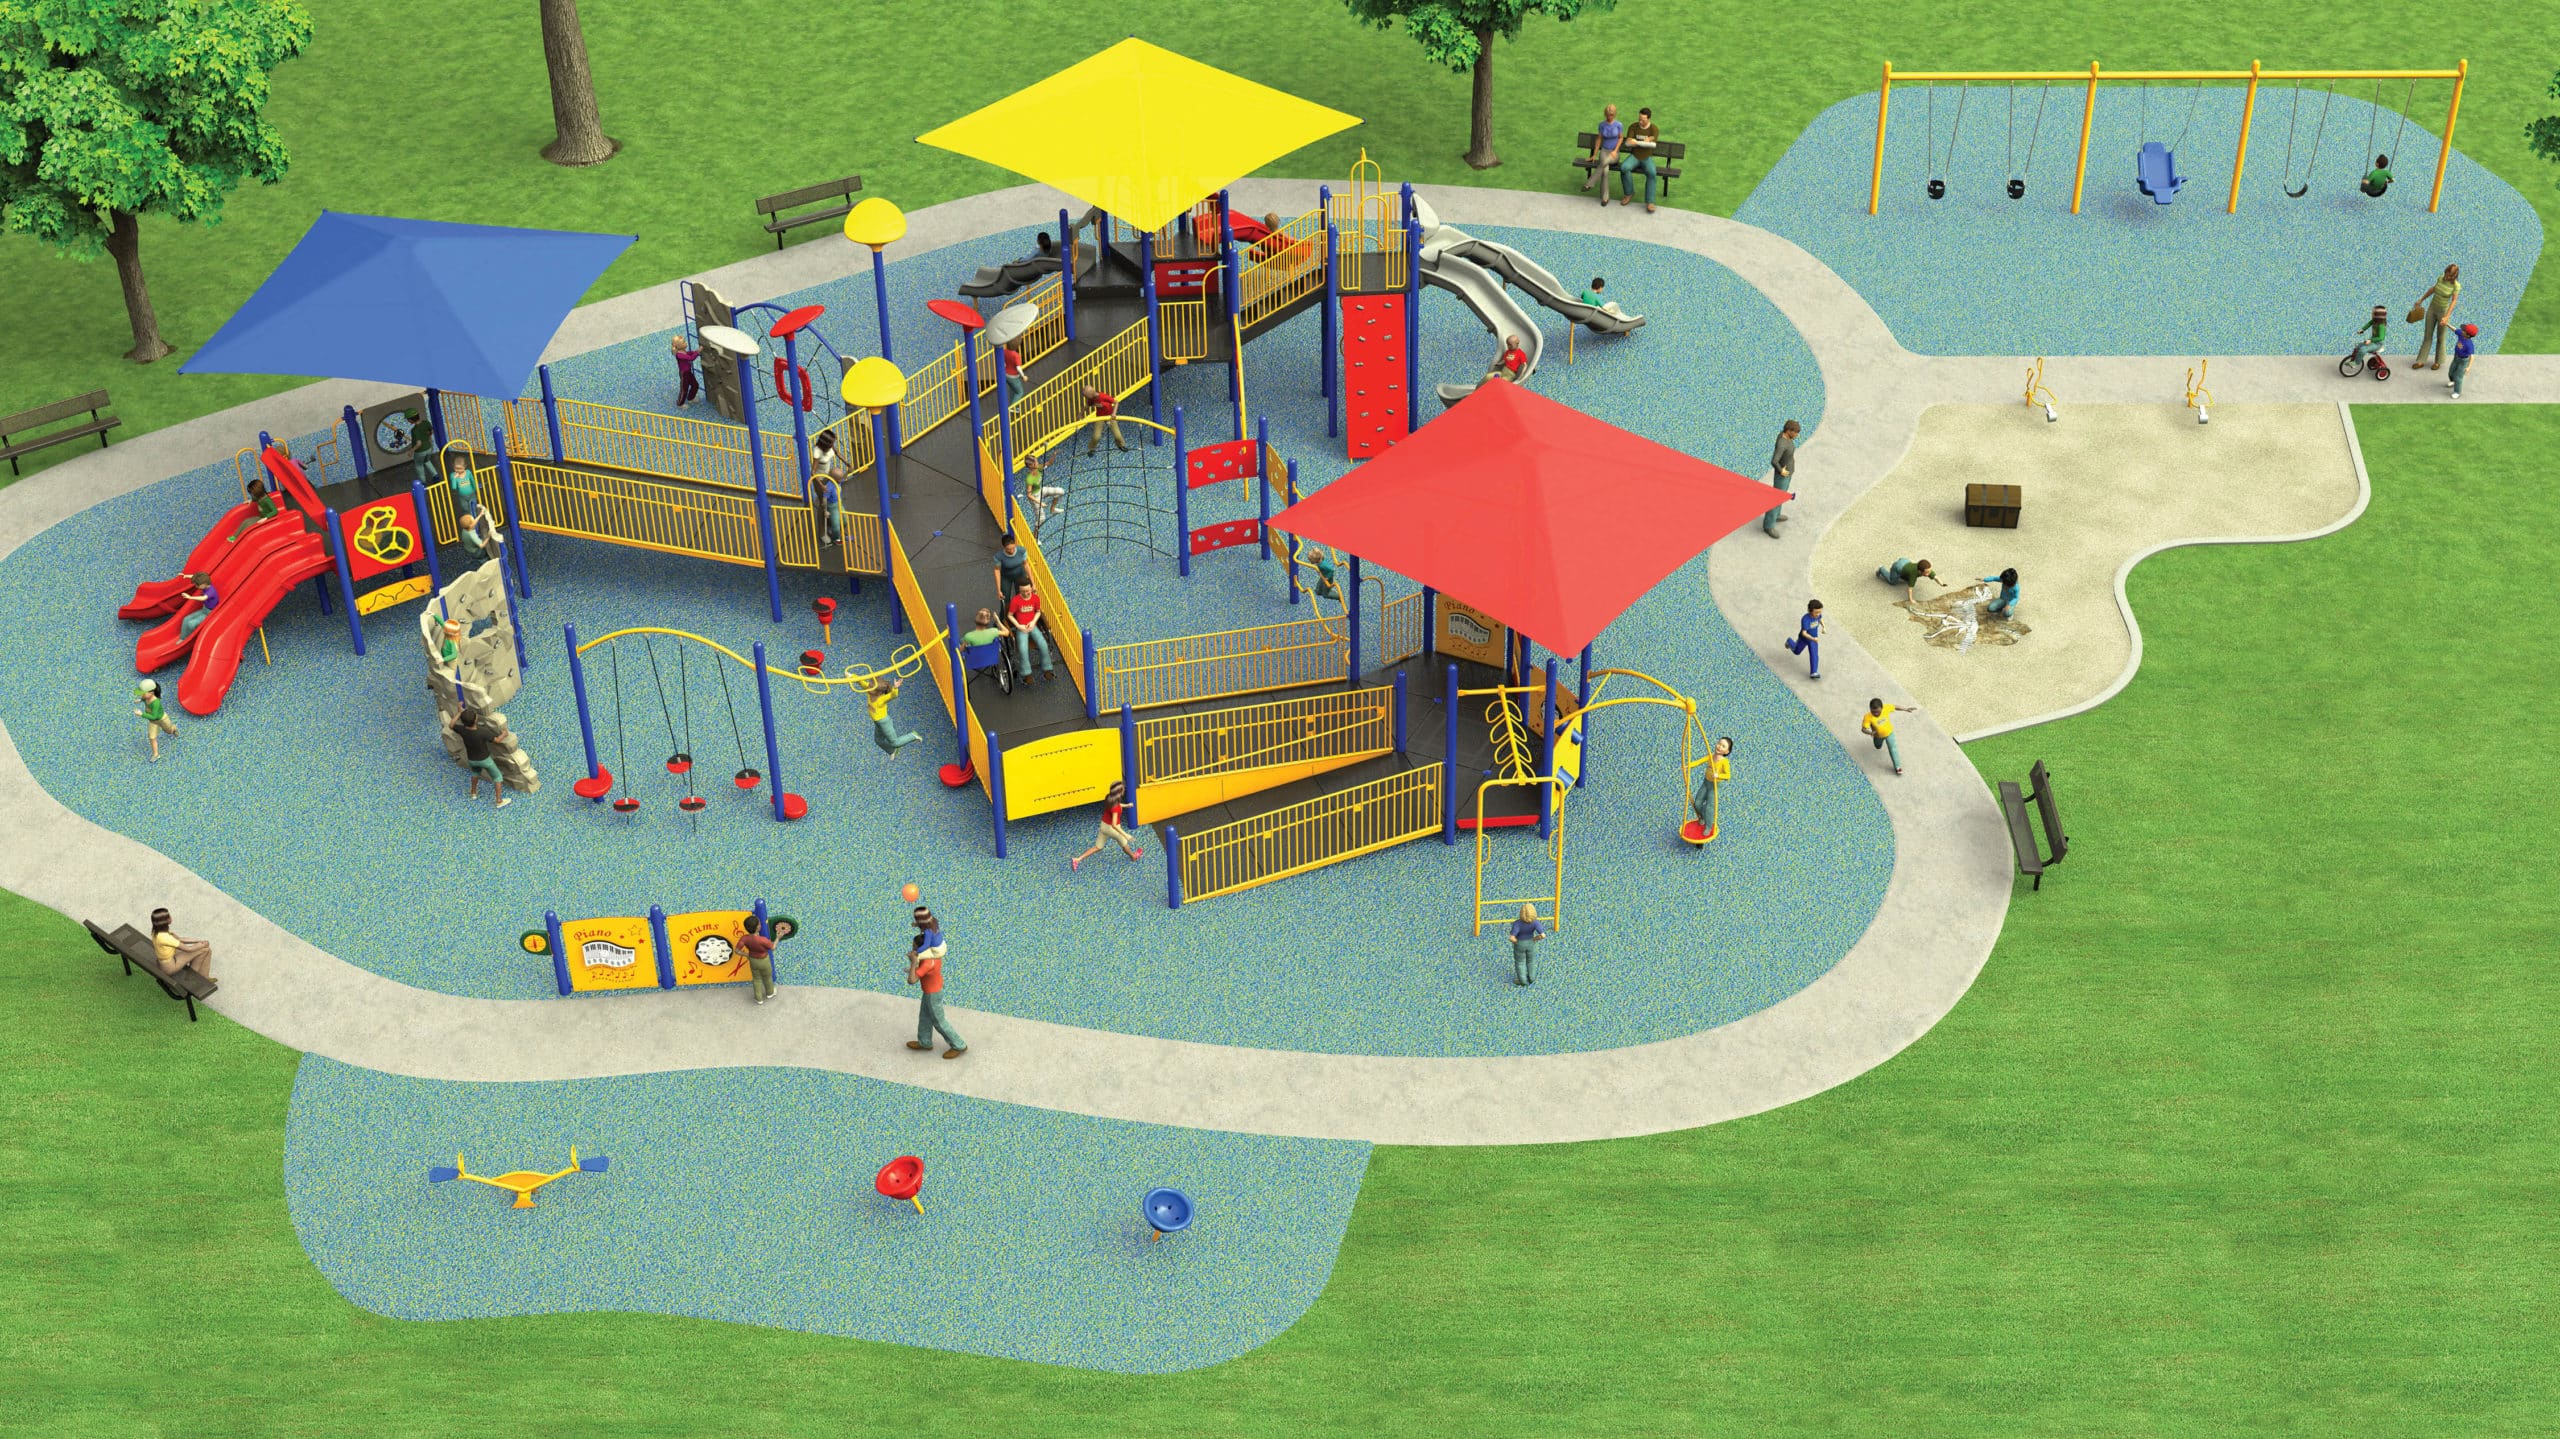 Large outdoor playground set